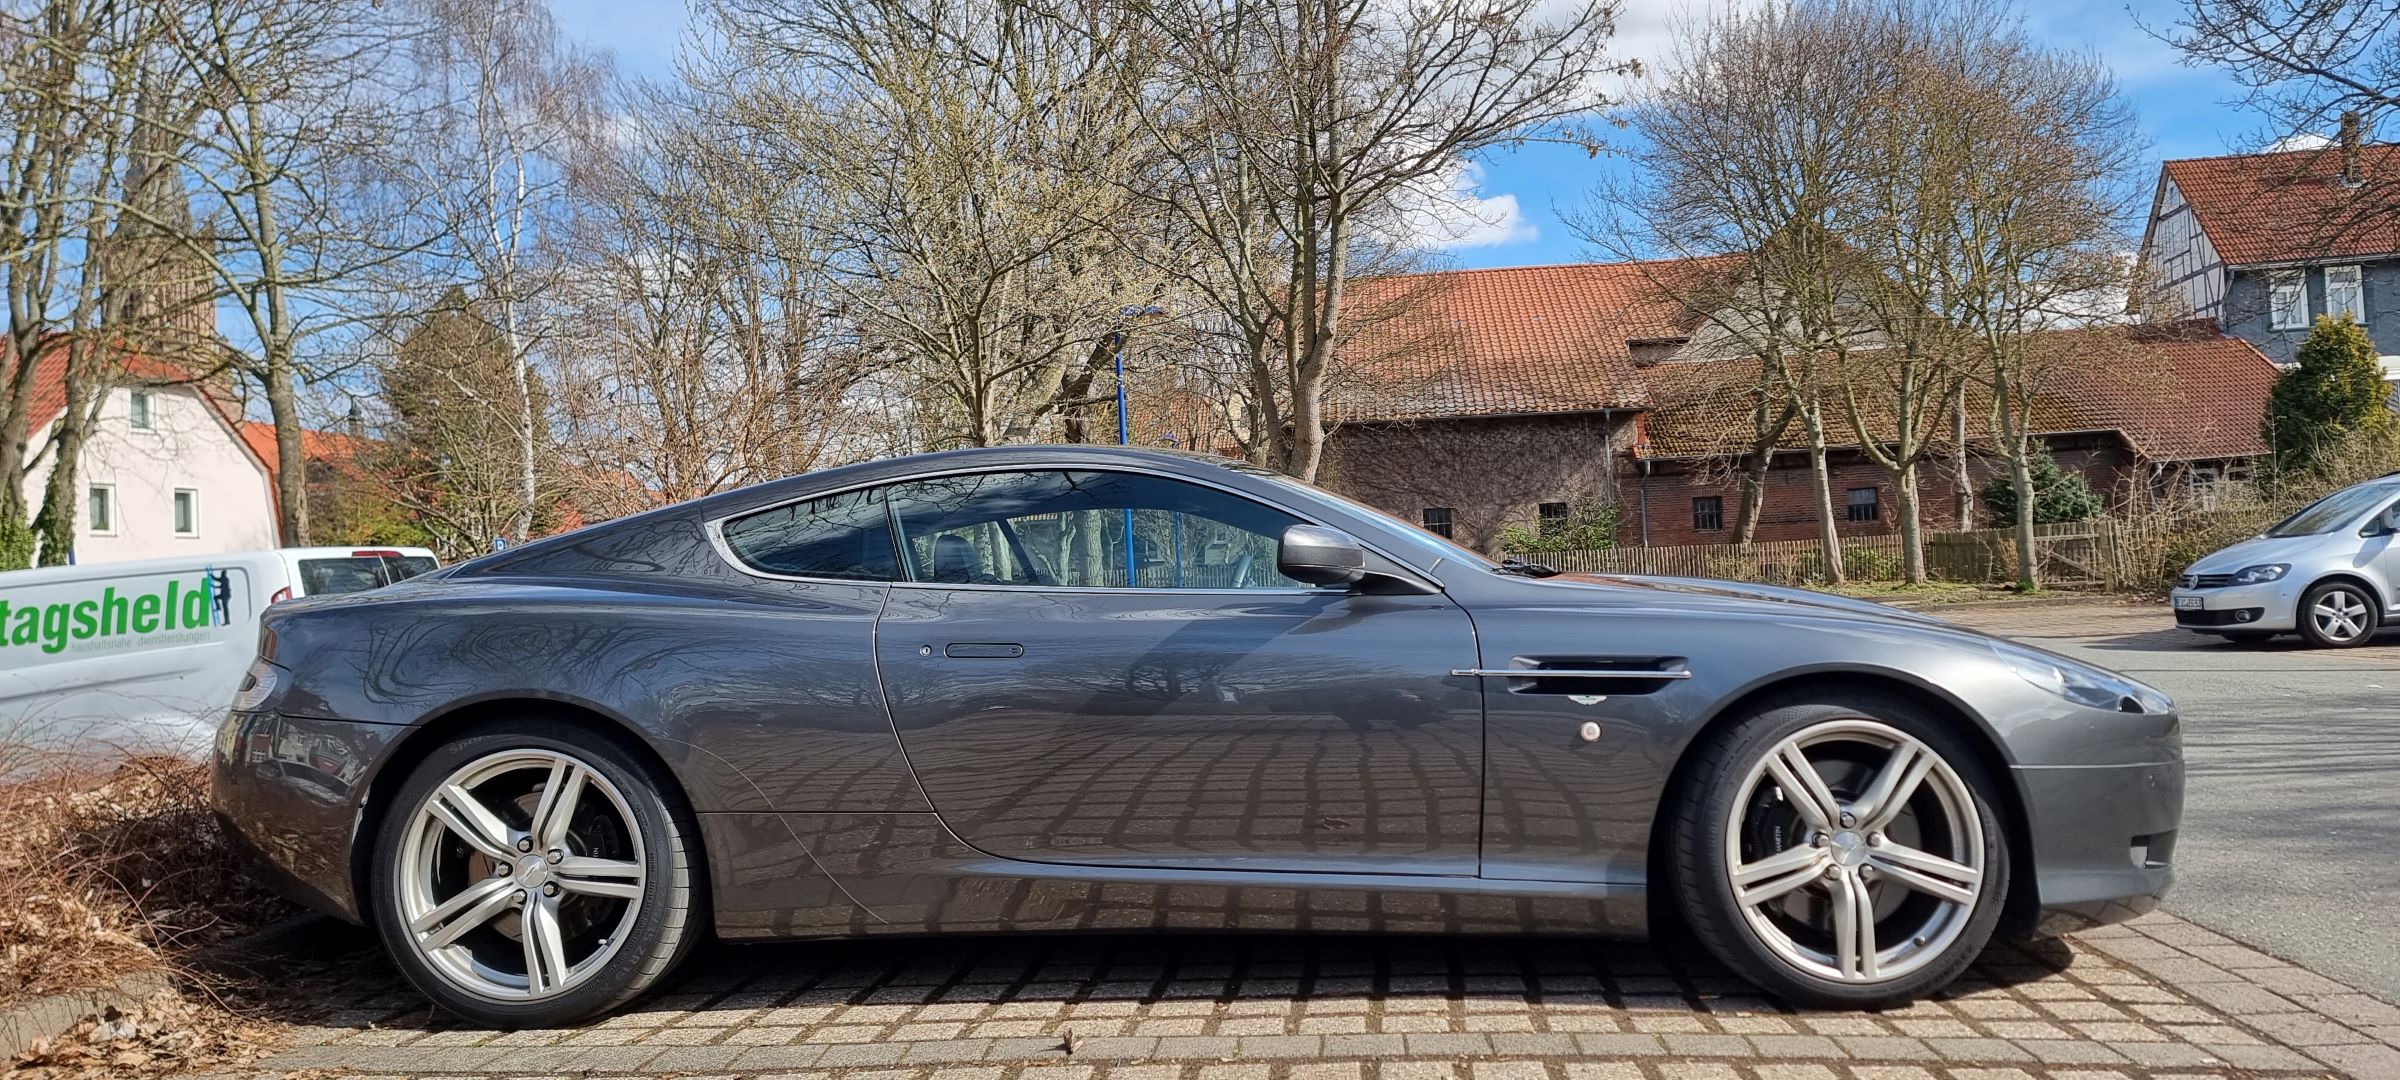 Aston Martin Bad Heiligenstadt 2.jpg